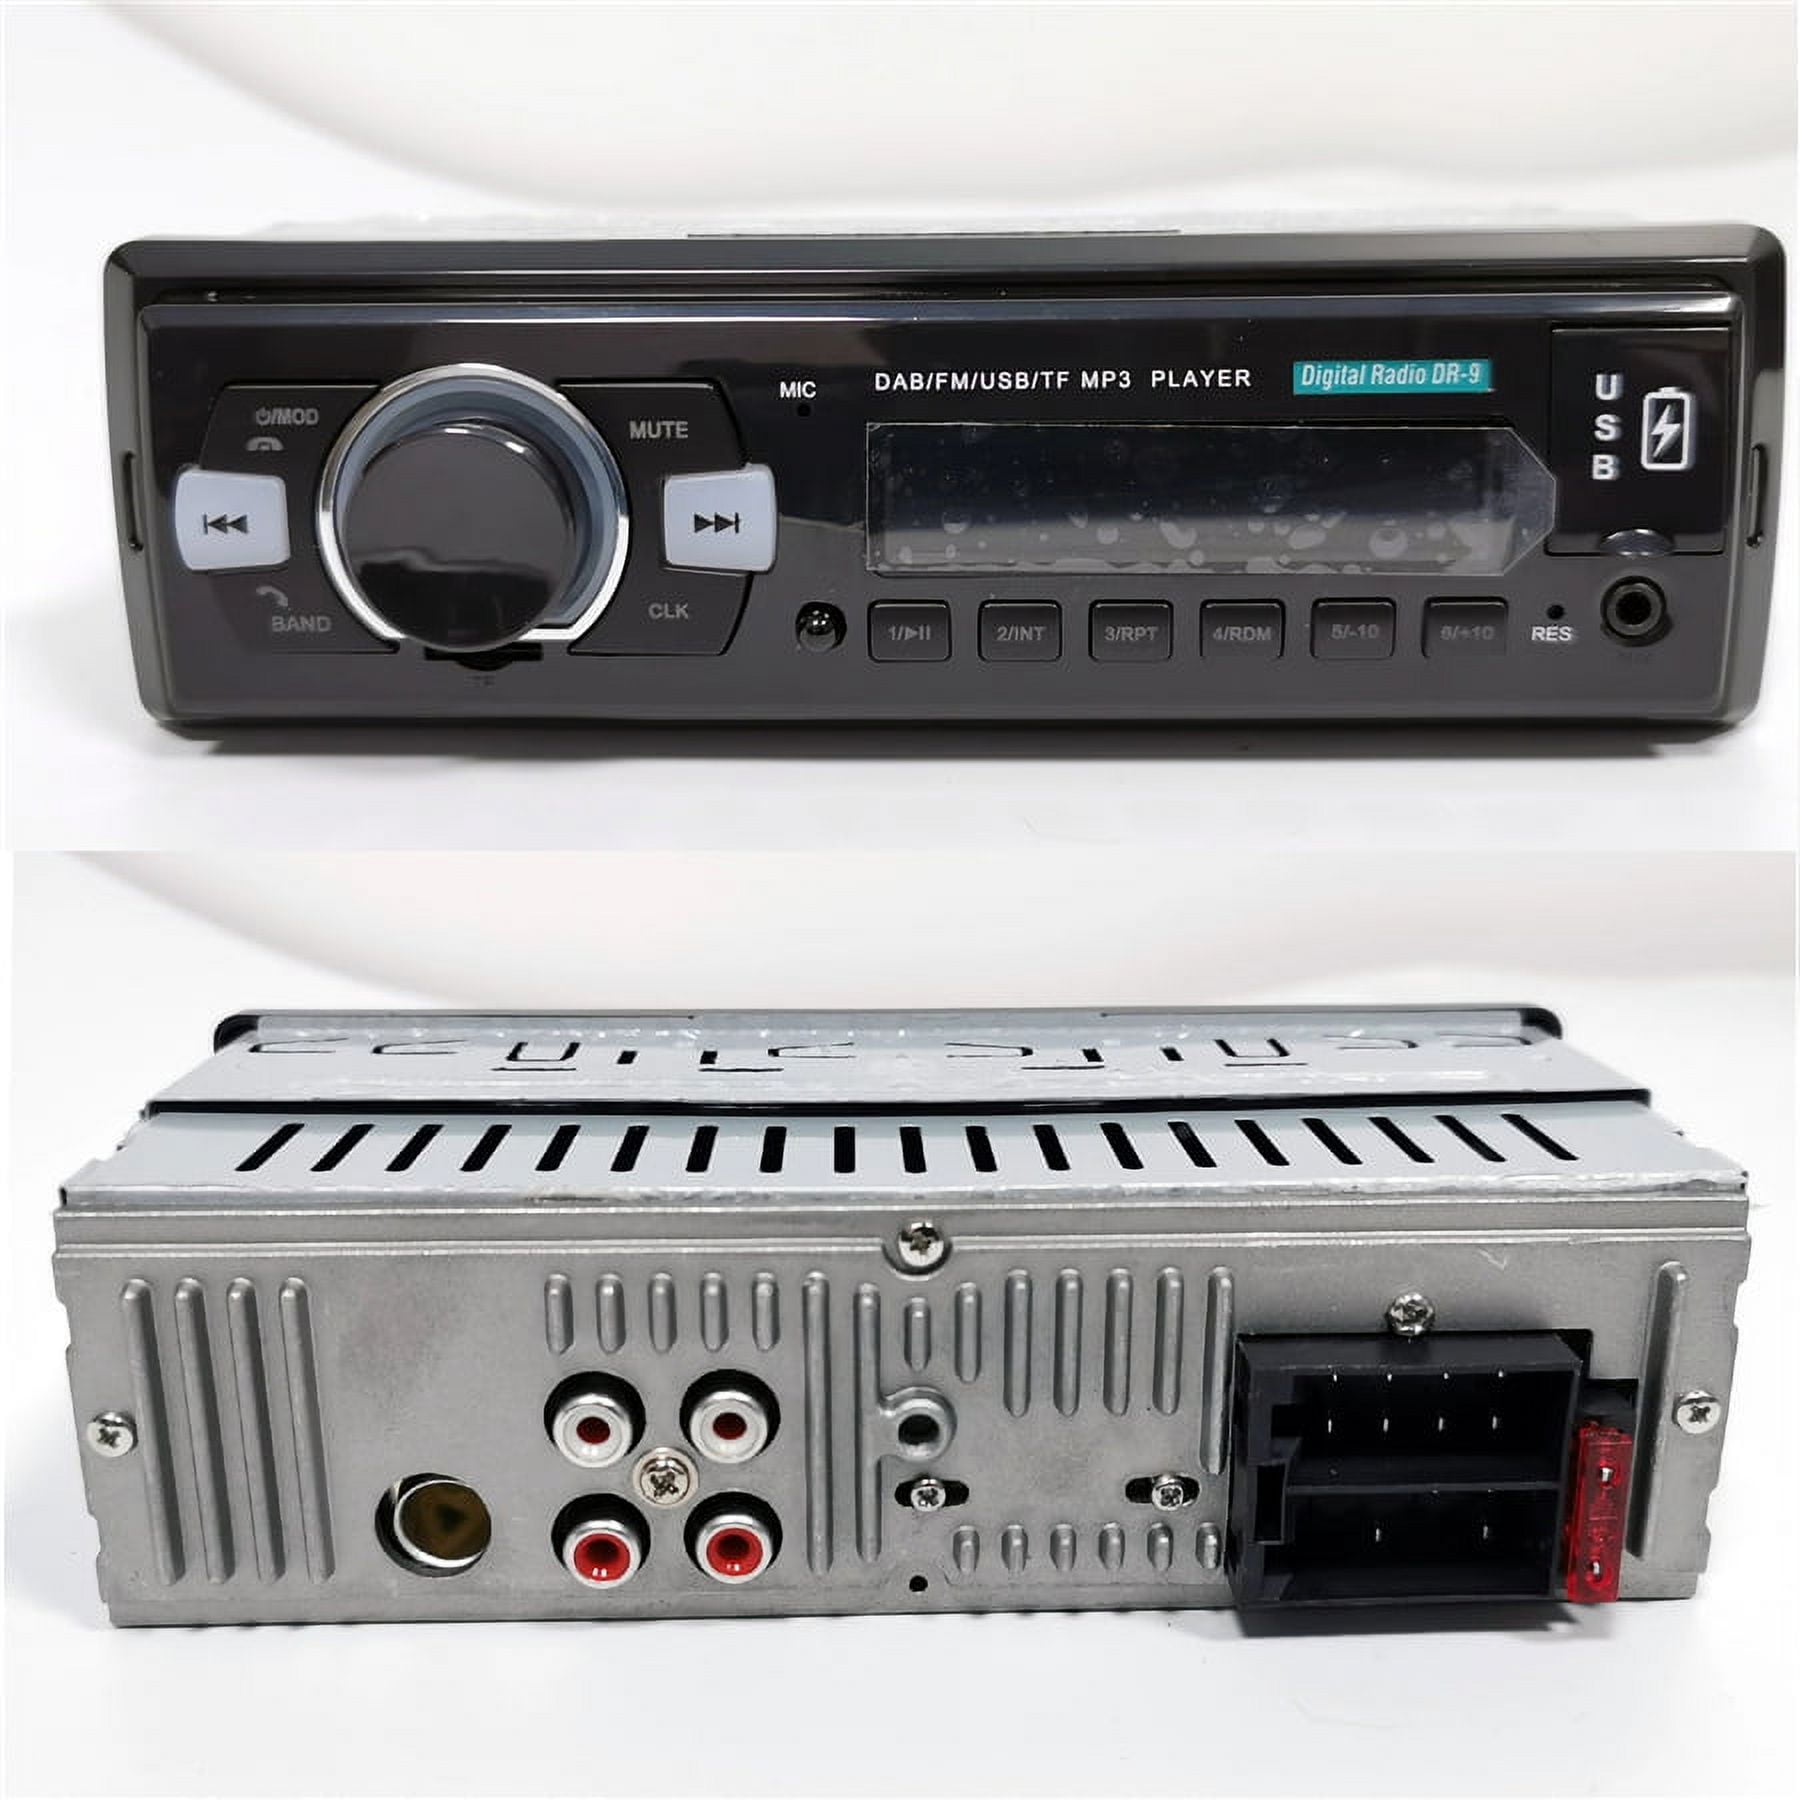 12V Car Radio 1 Din Kit Stereo Audio MP3 Player Support USB TF